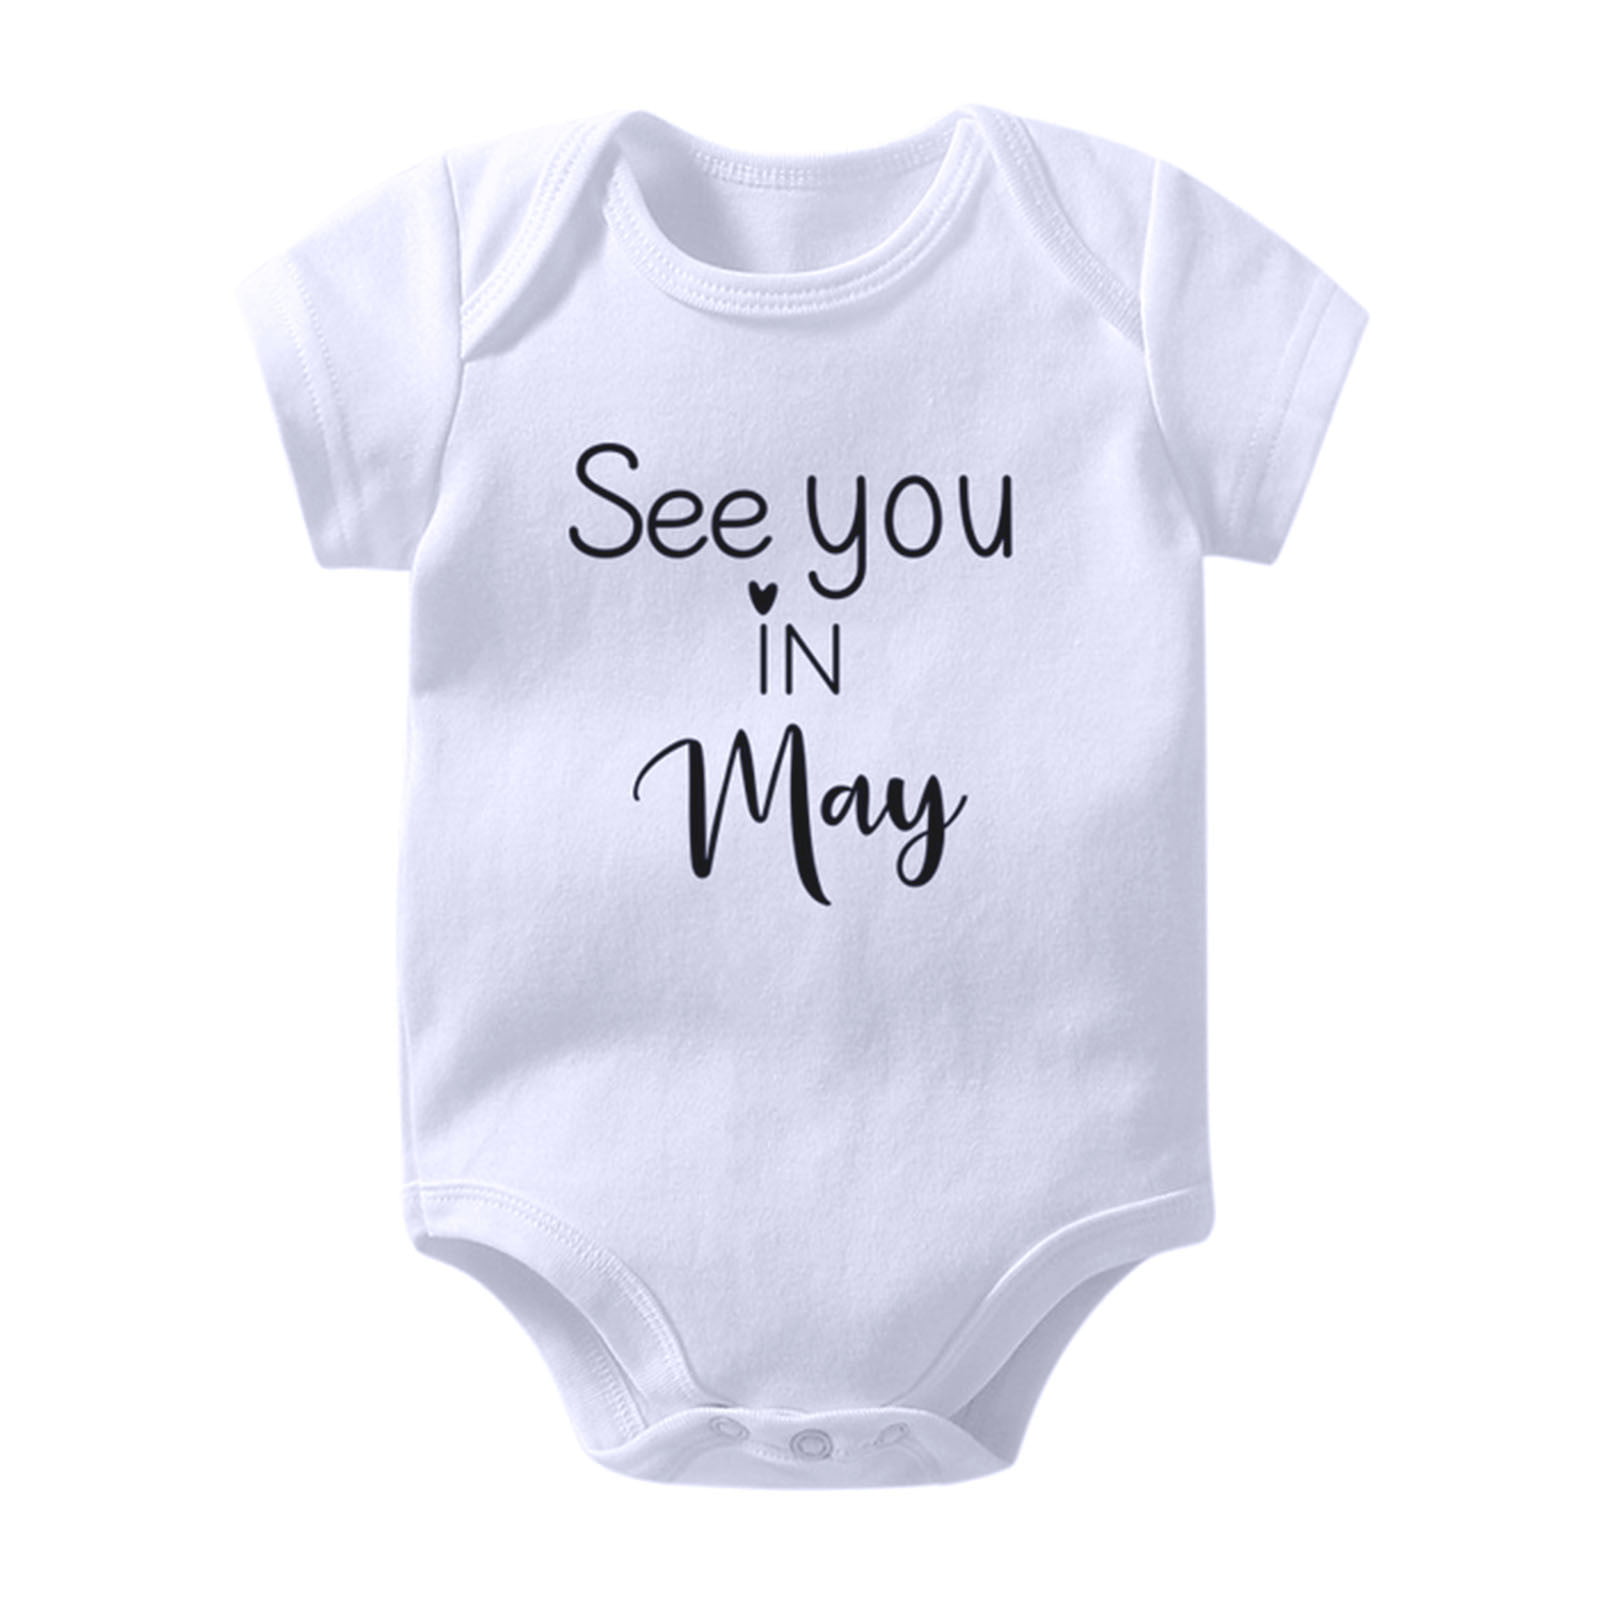 Toddler Newborn Infant Kids Baby Girls T-shirt Romper Jumpsuit Bodysuit Clothes 